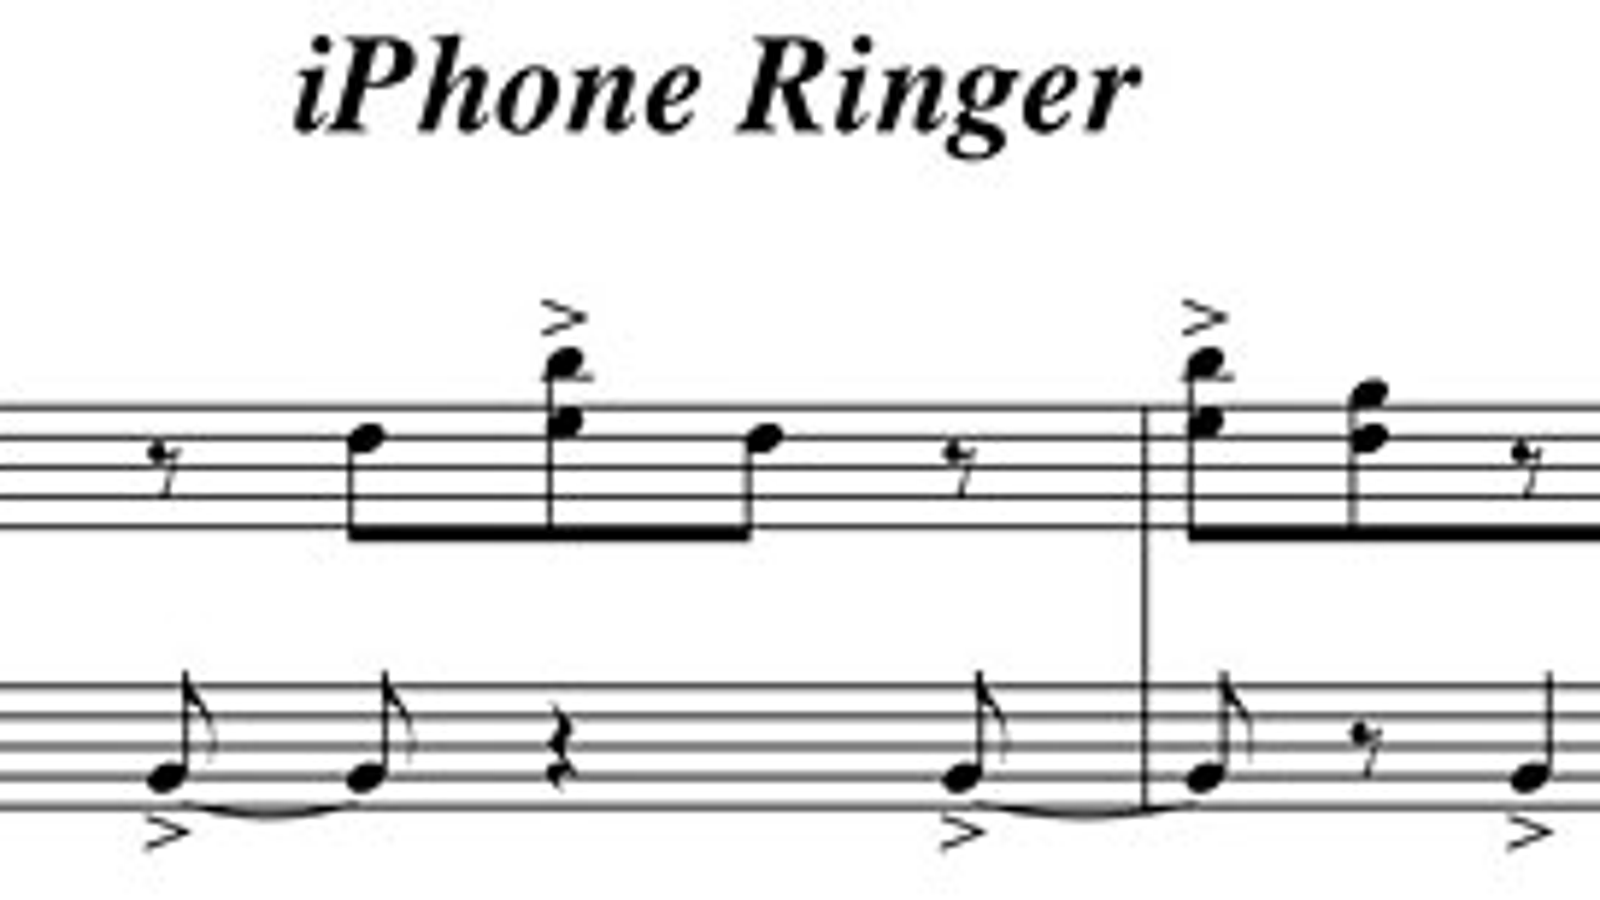 iphone ringtone sound